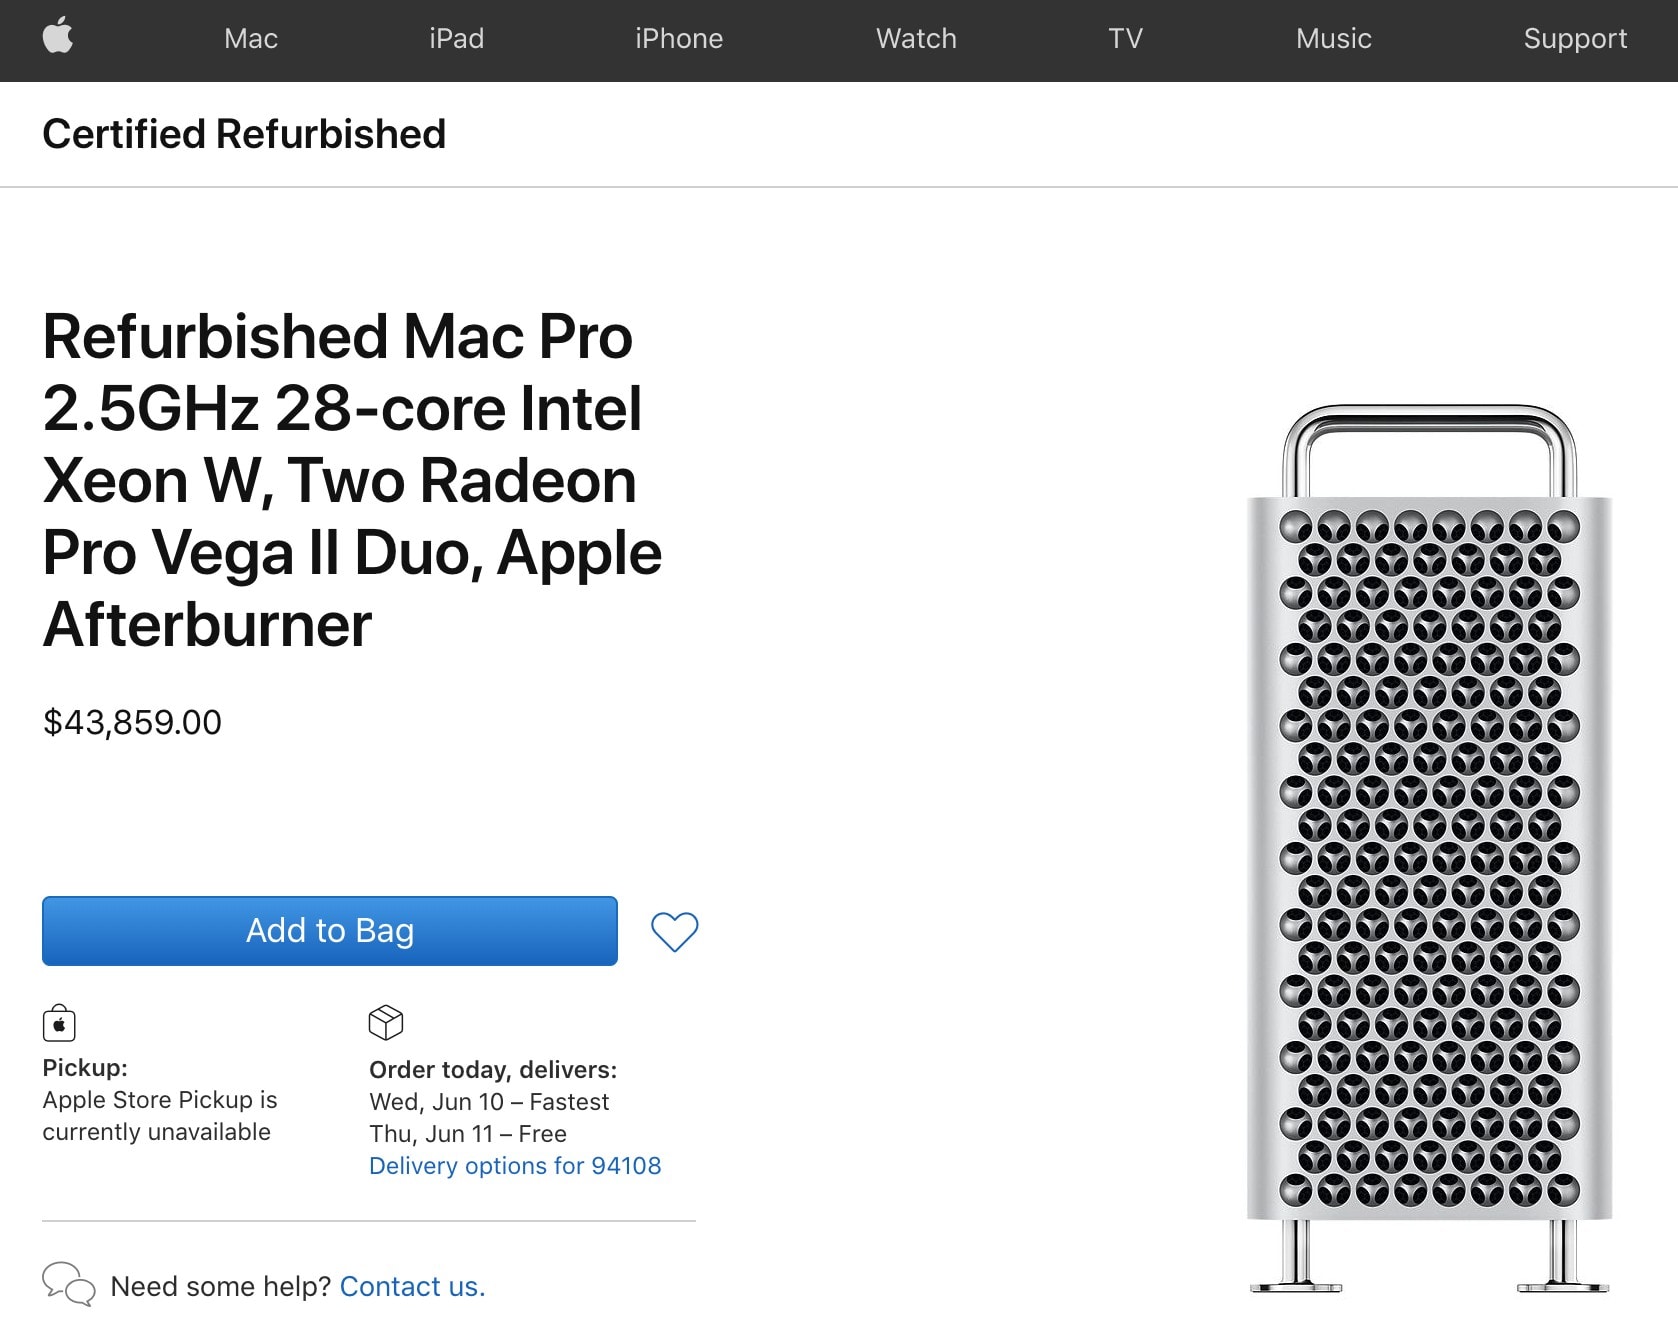 This refurbished Mac Pro costs $43,859.